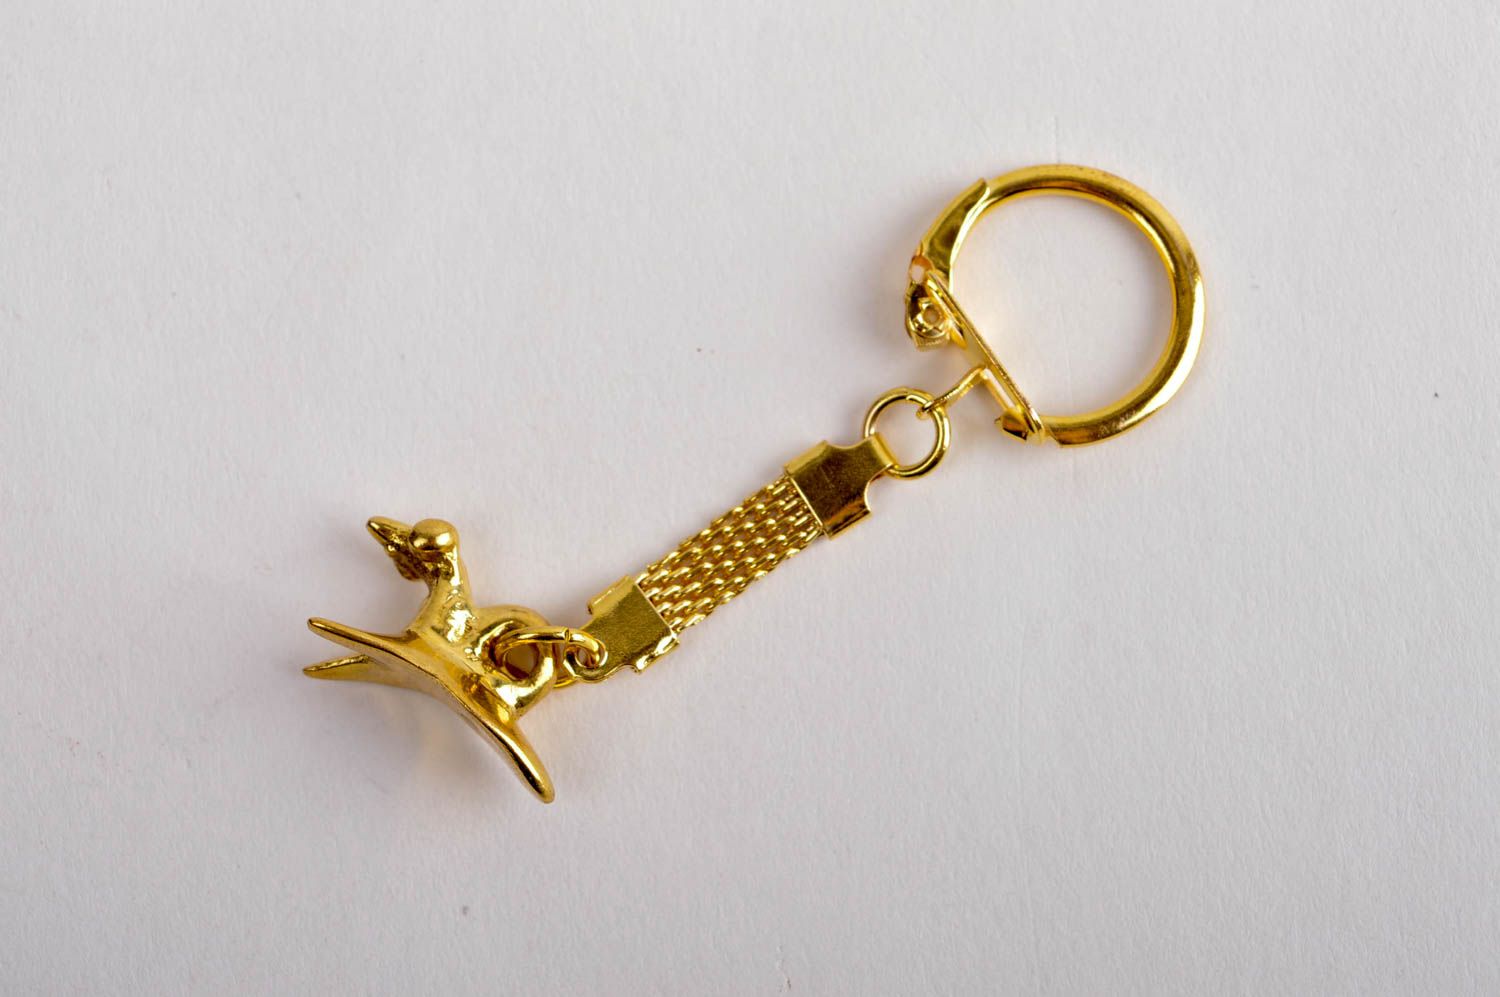 Unusual handmade metal keychain cool keyrings handmade accessories buy a gift photo 4